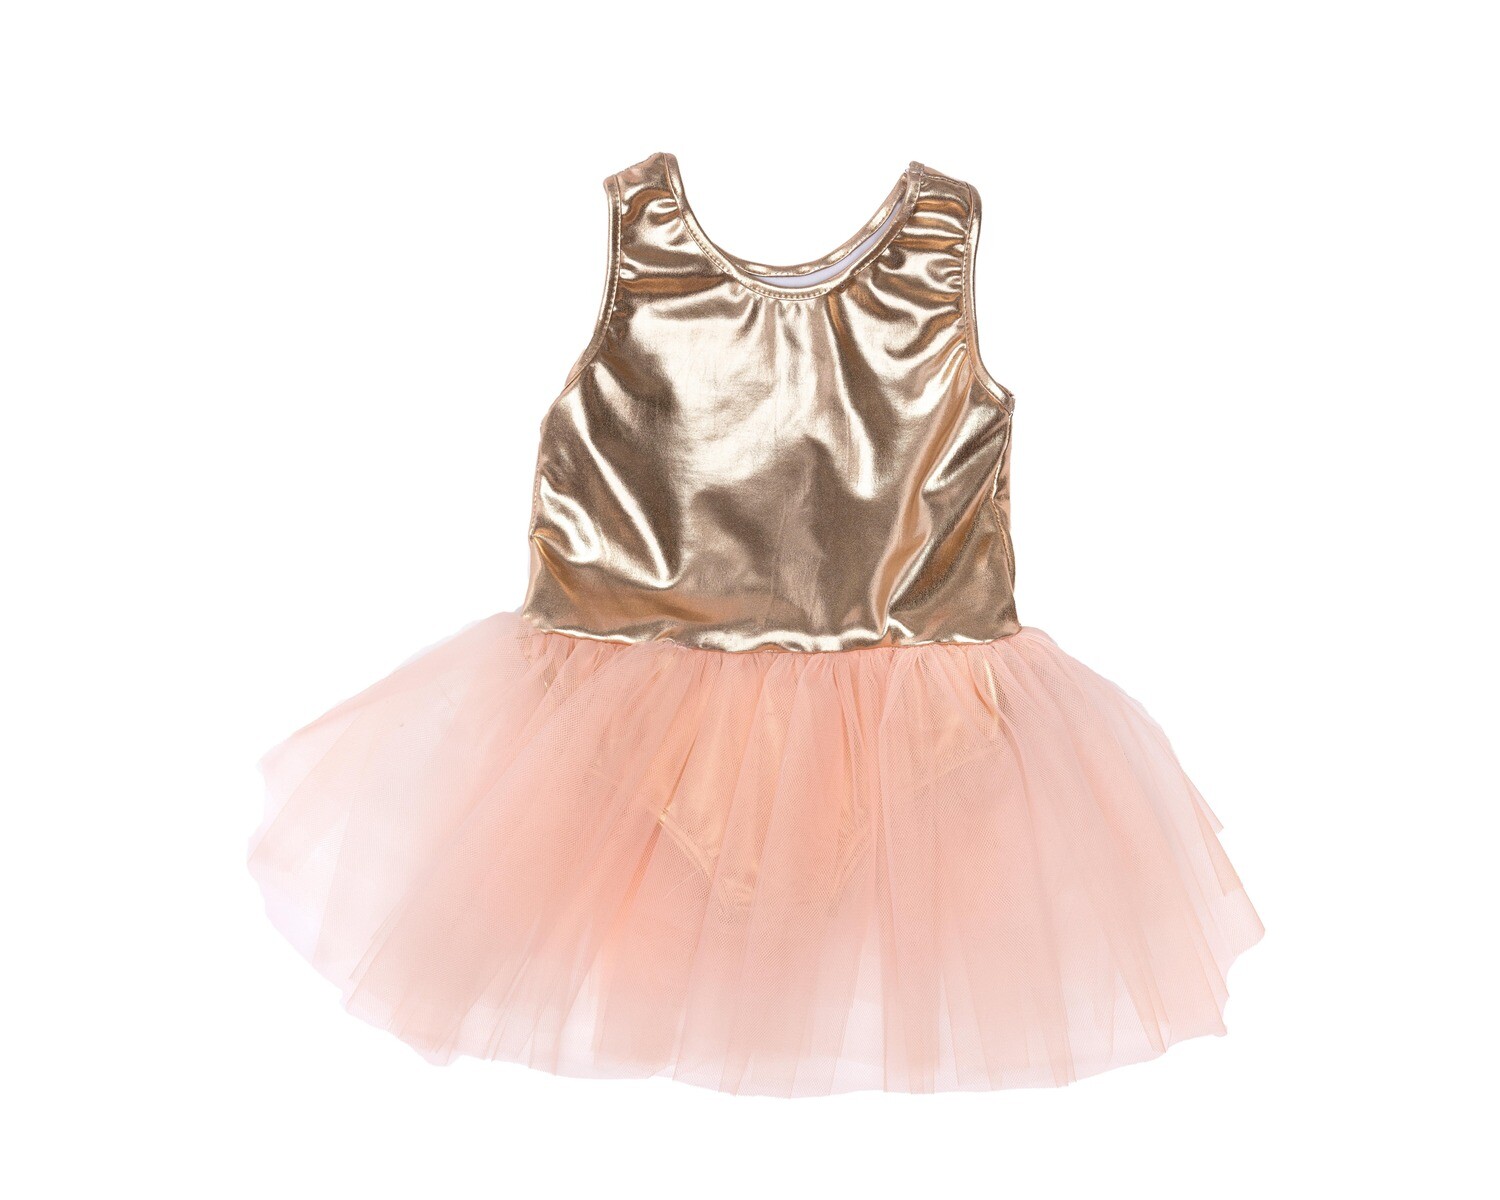 GP Ballet Tutu Dress, Rose Gold, Size 3-4